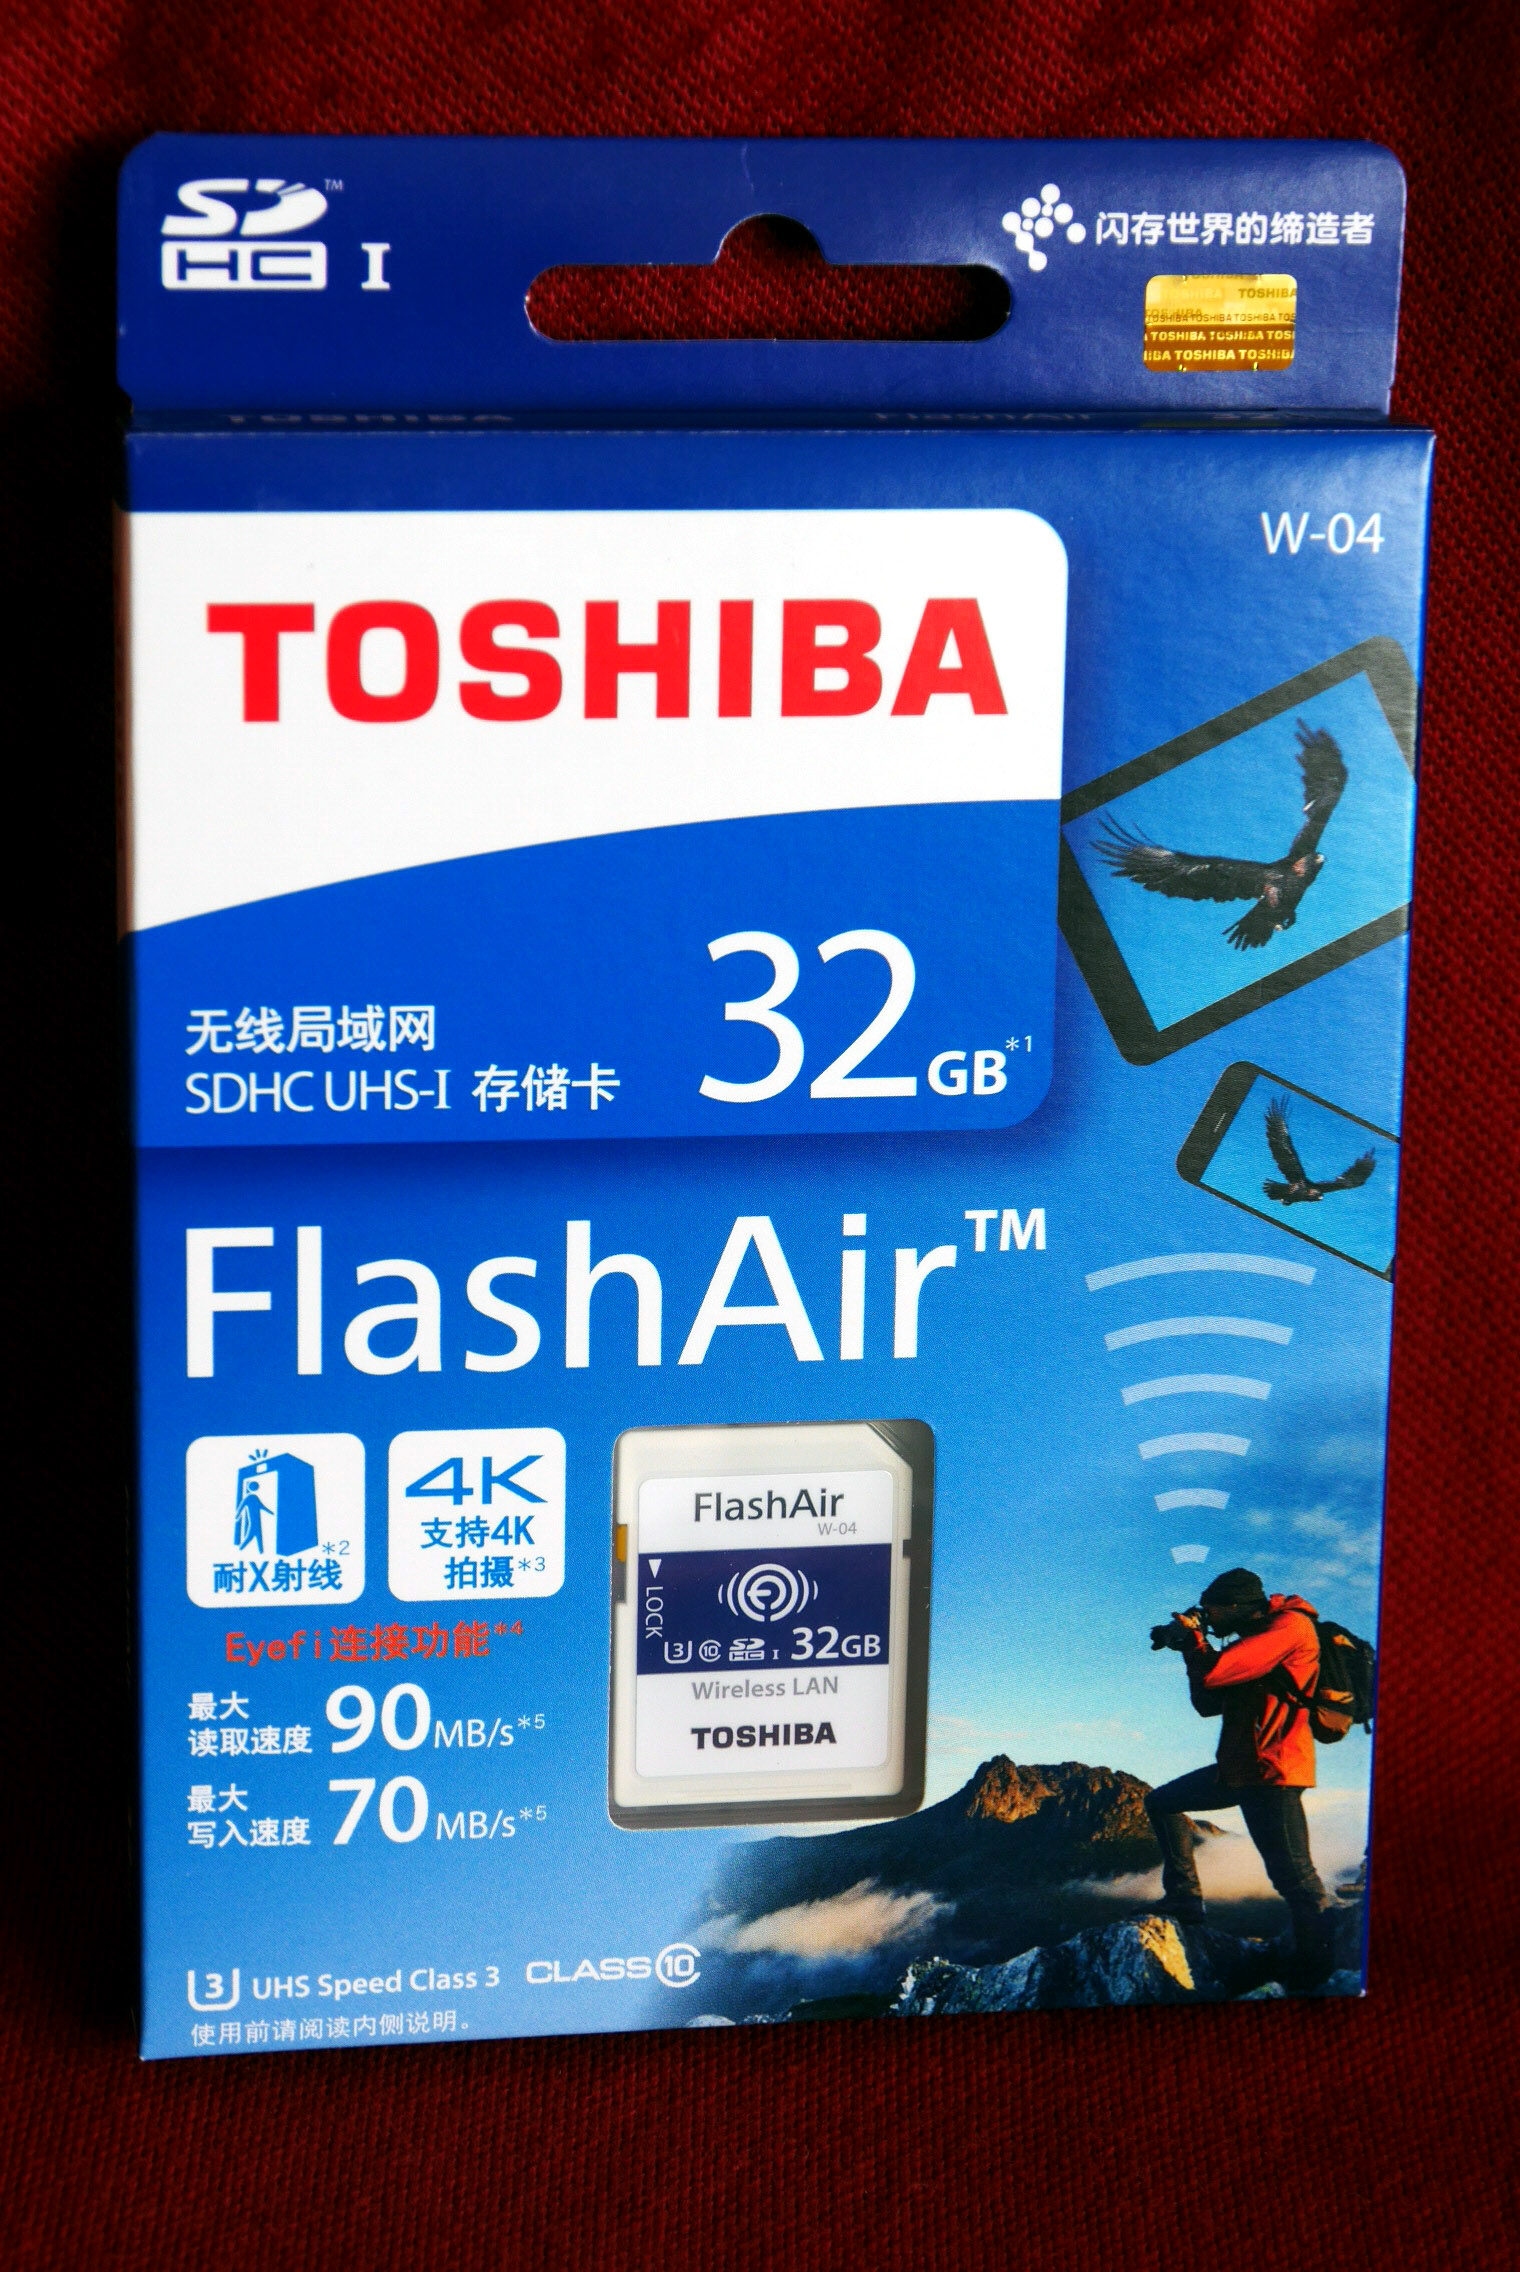 Toshiba FlashAir SD WIFI 32GB FlashAir™ W-04 (ความจุ 32GB) New in